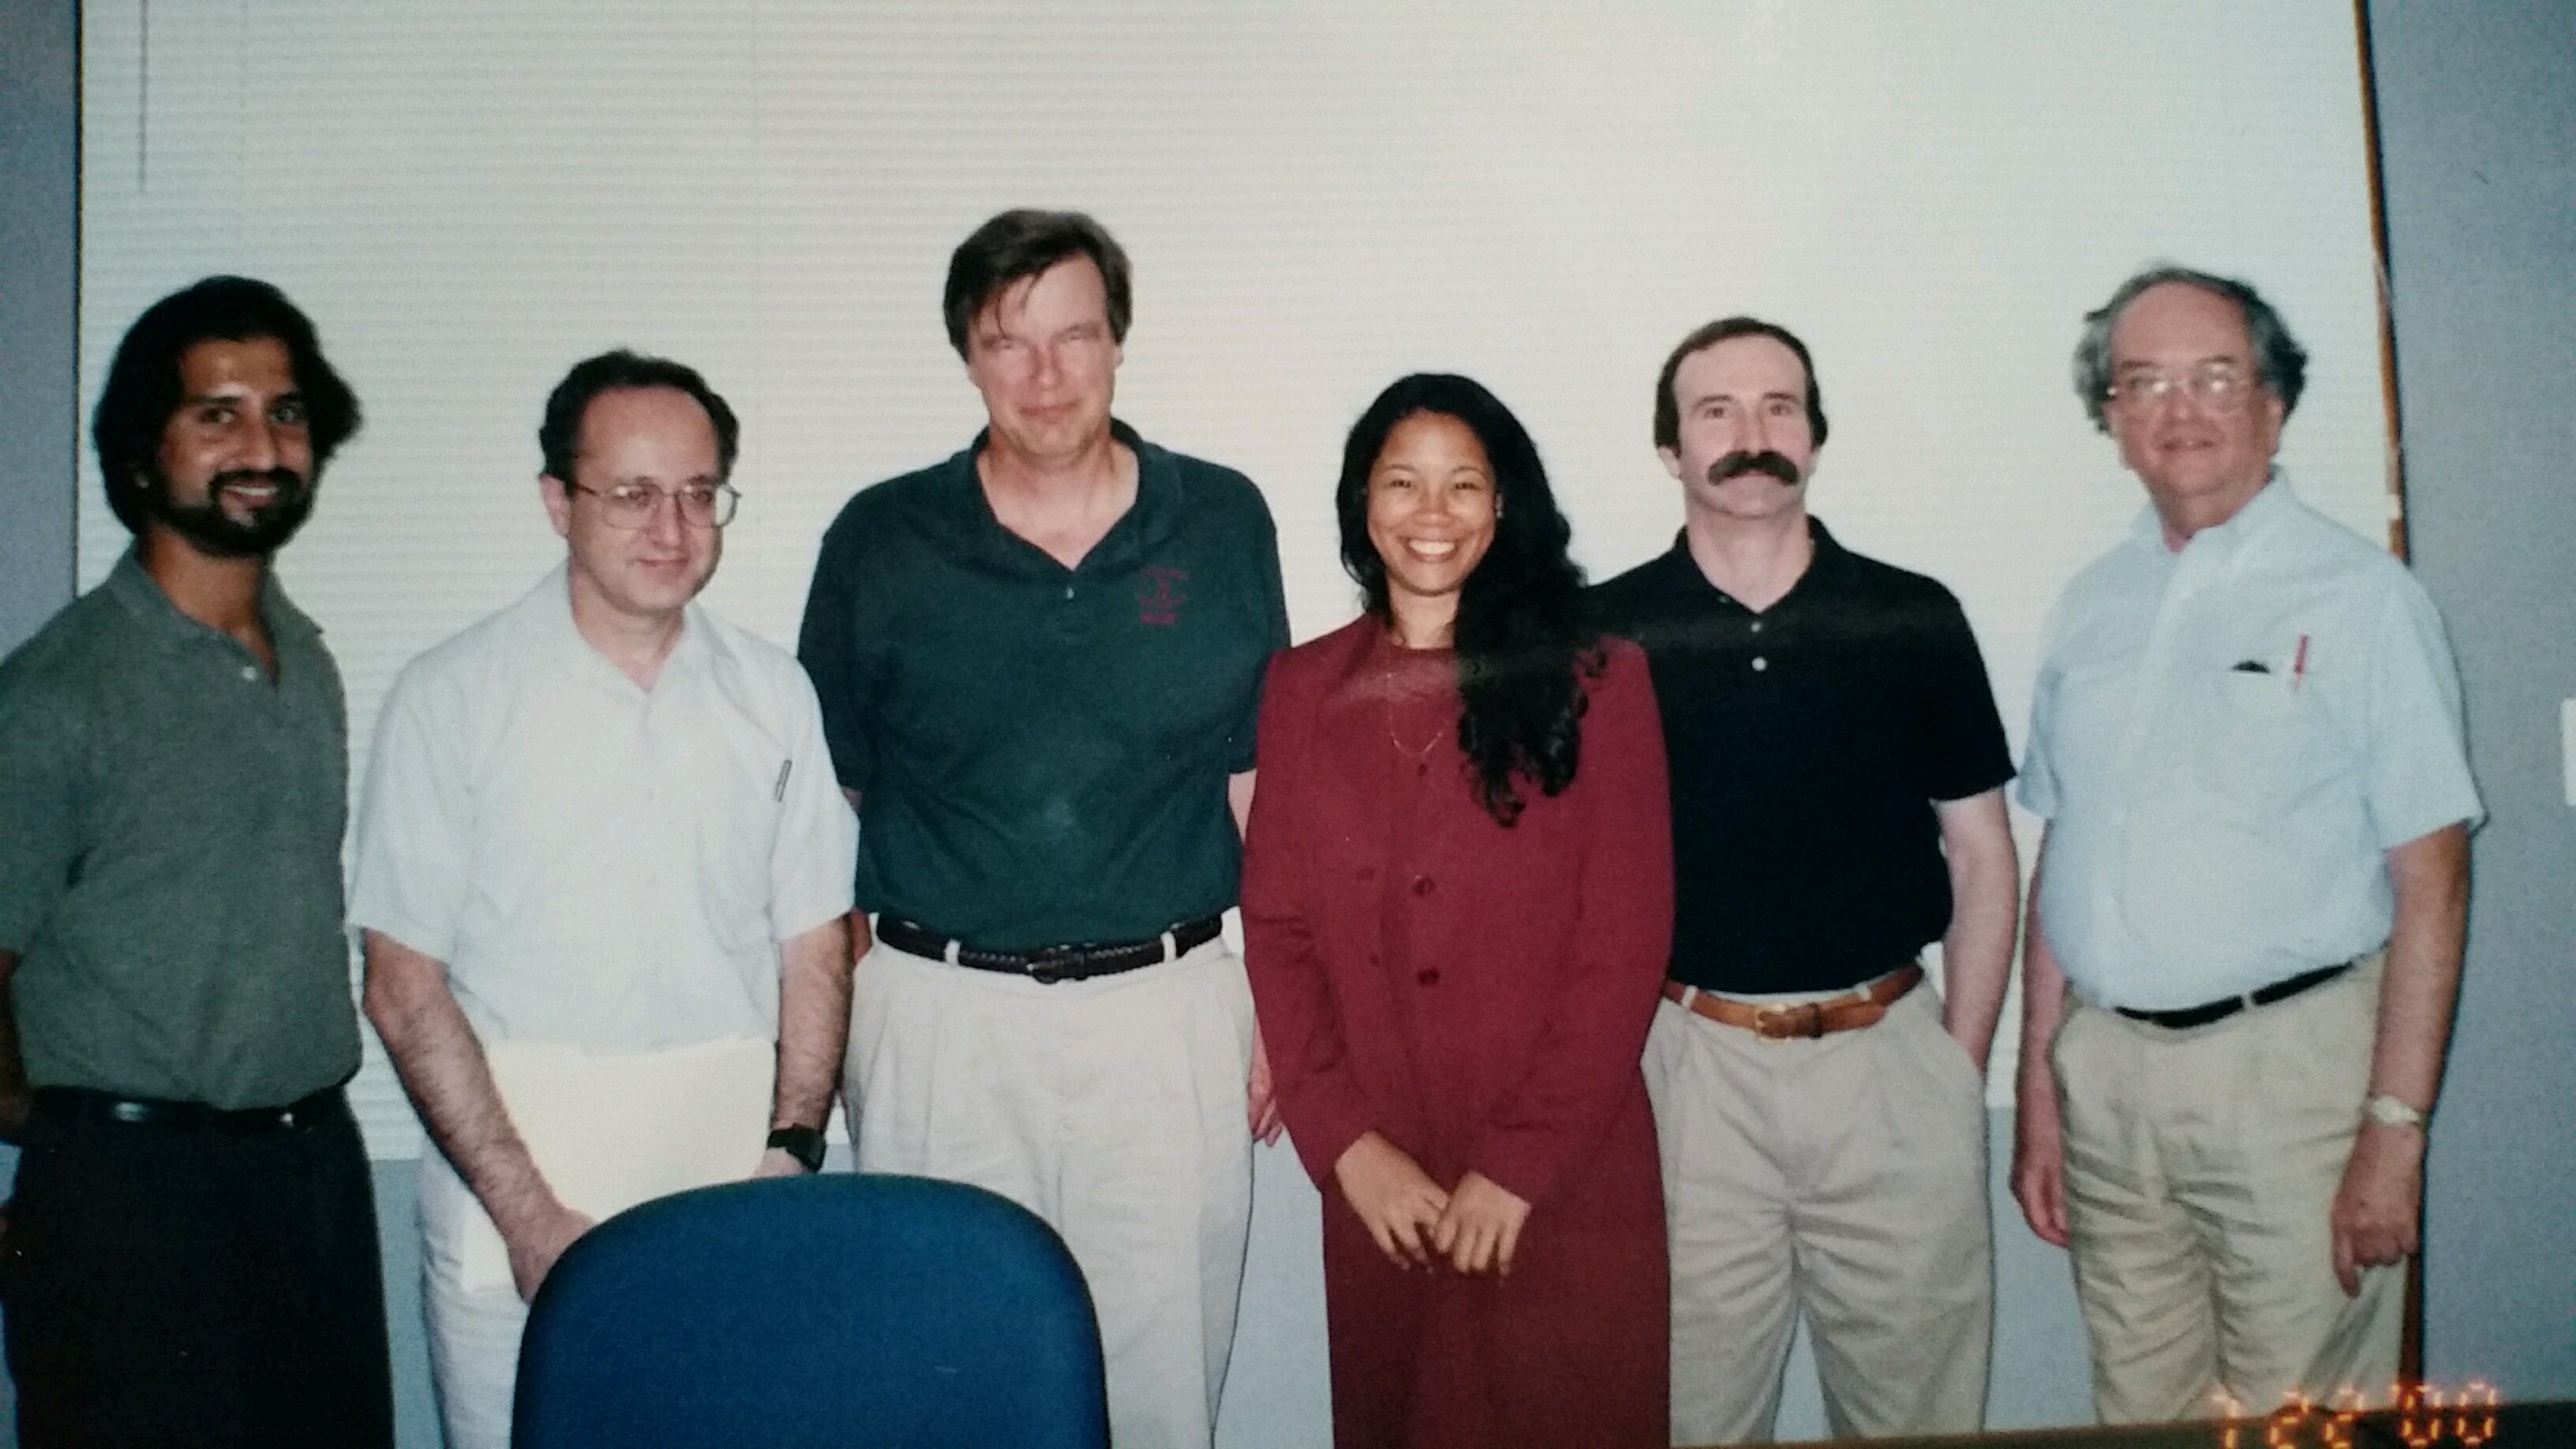 Tasha Inniss at her final thesis defense on July 21, 2000. Photo courtesy of Tasha Inniss.